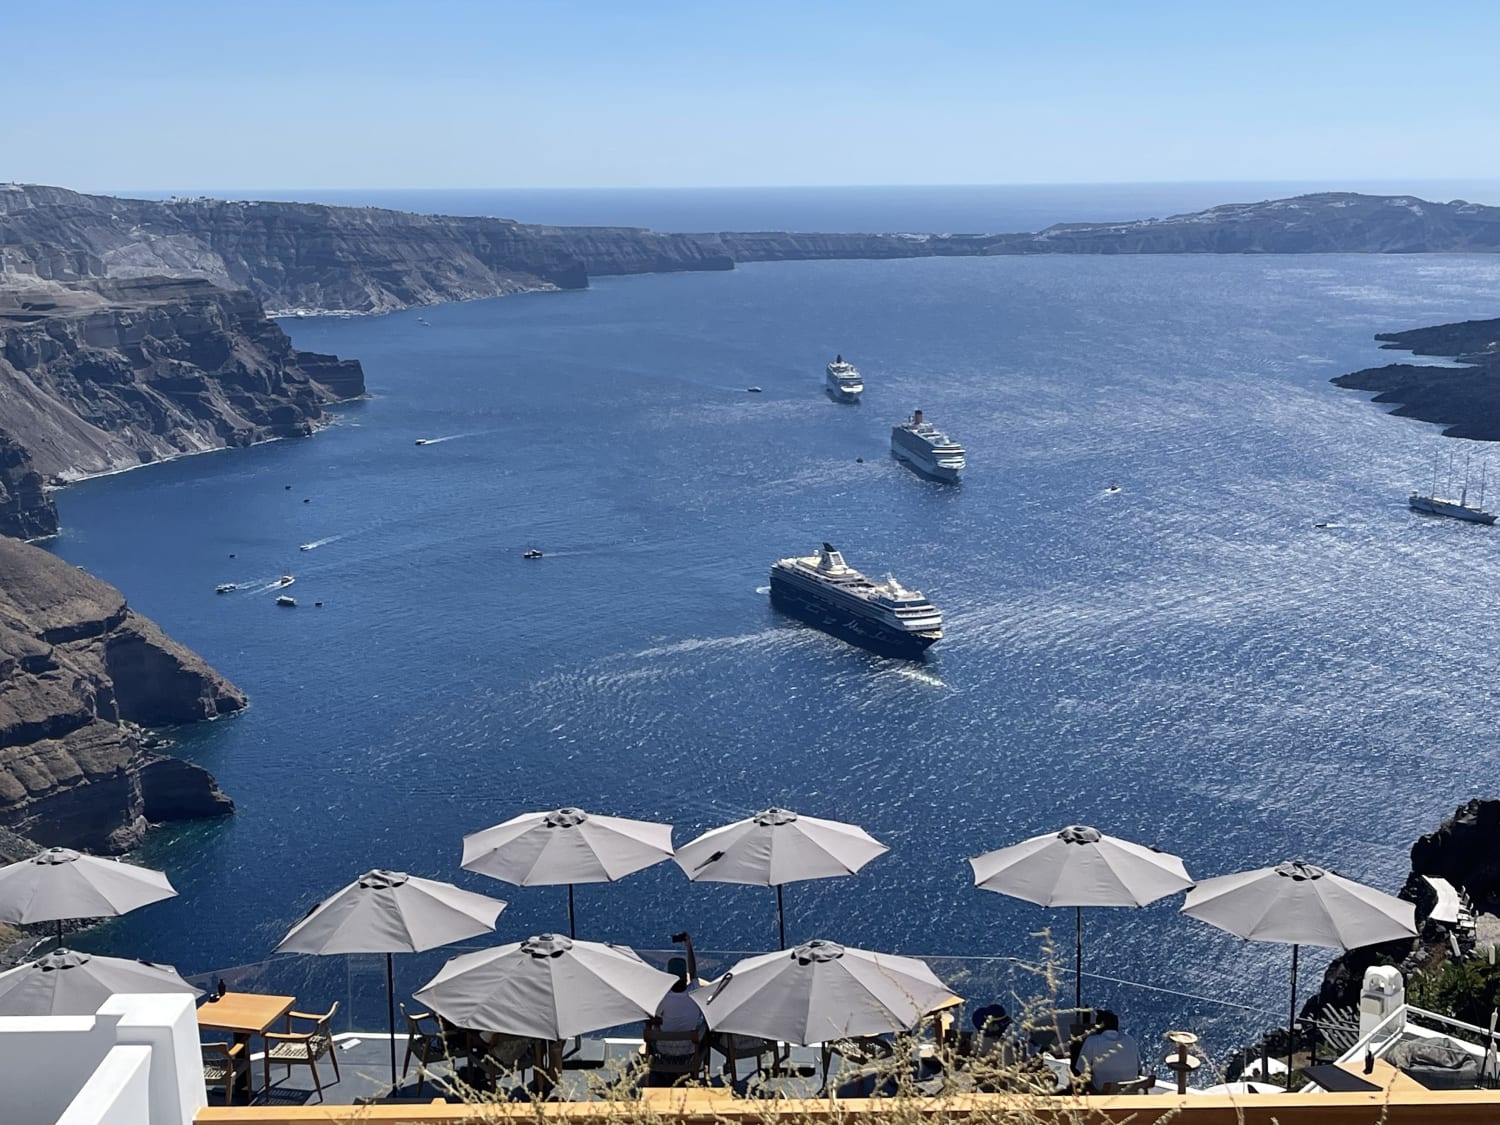 Todays view from The Vasilicos - Santorini 🤷👍😊